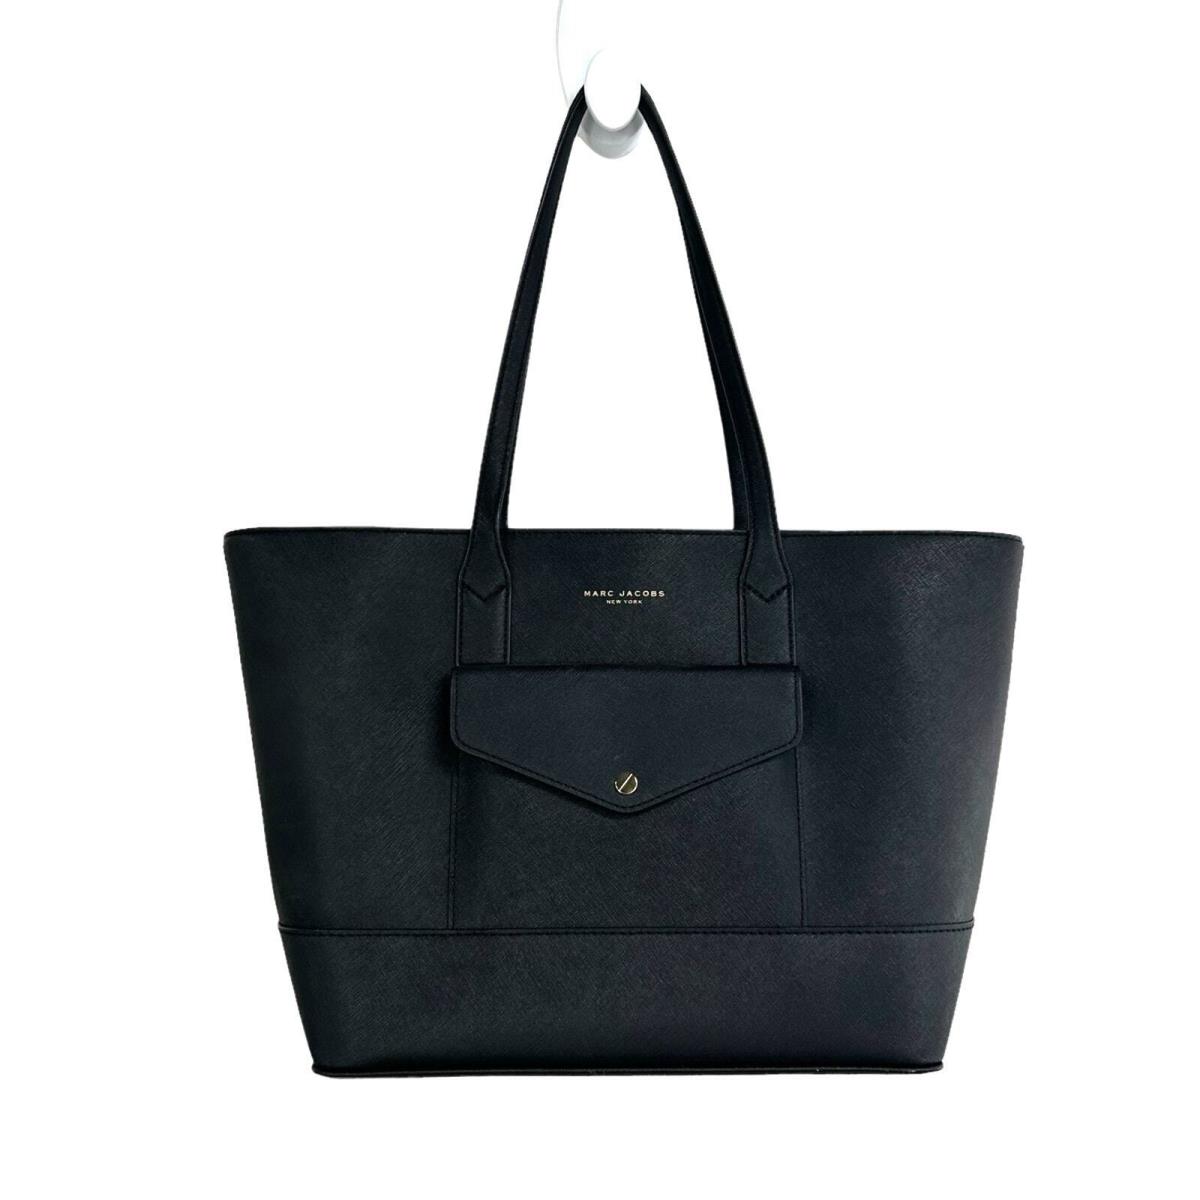 Marc Jacobs Black Saffiano Leather Front Pocket Double Handle Tote Bag